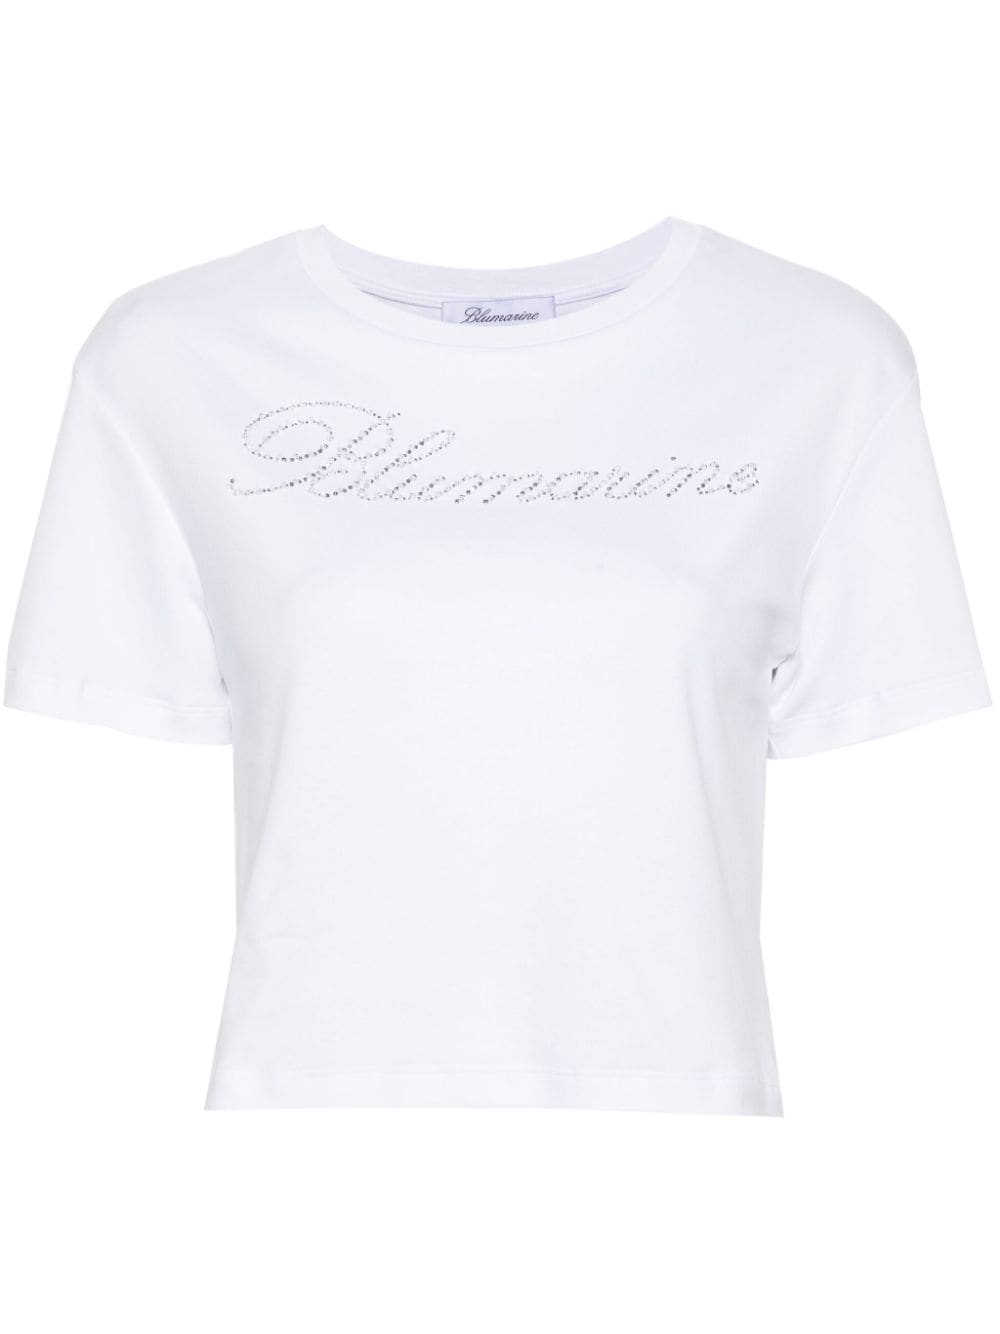 Blumarine Rhinestone Embellished Cotton T-shirt In White